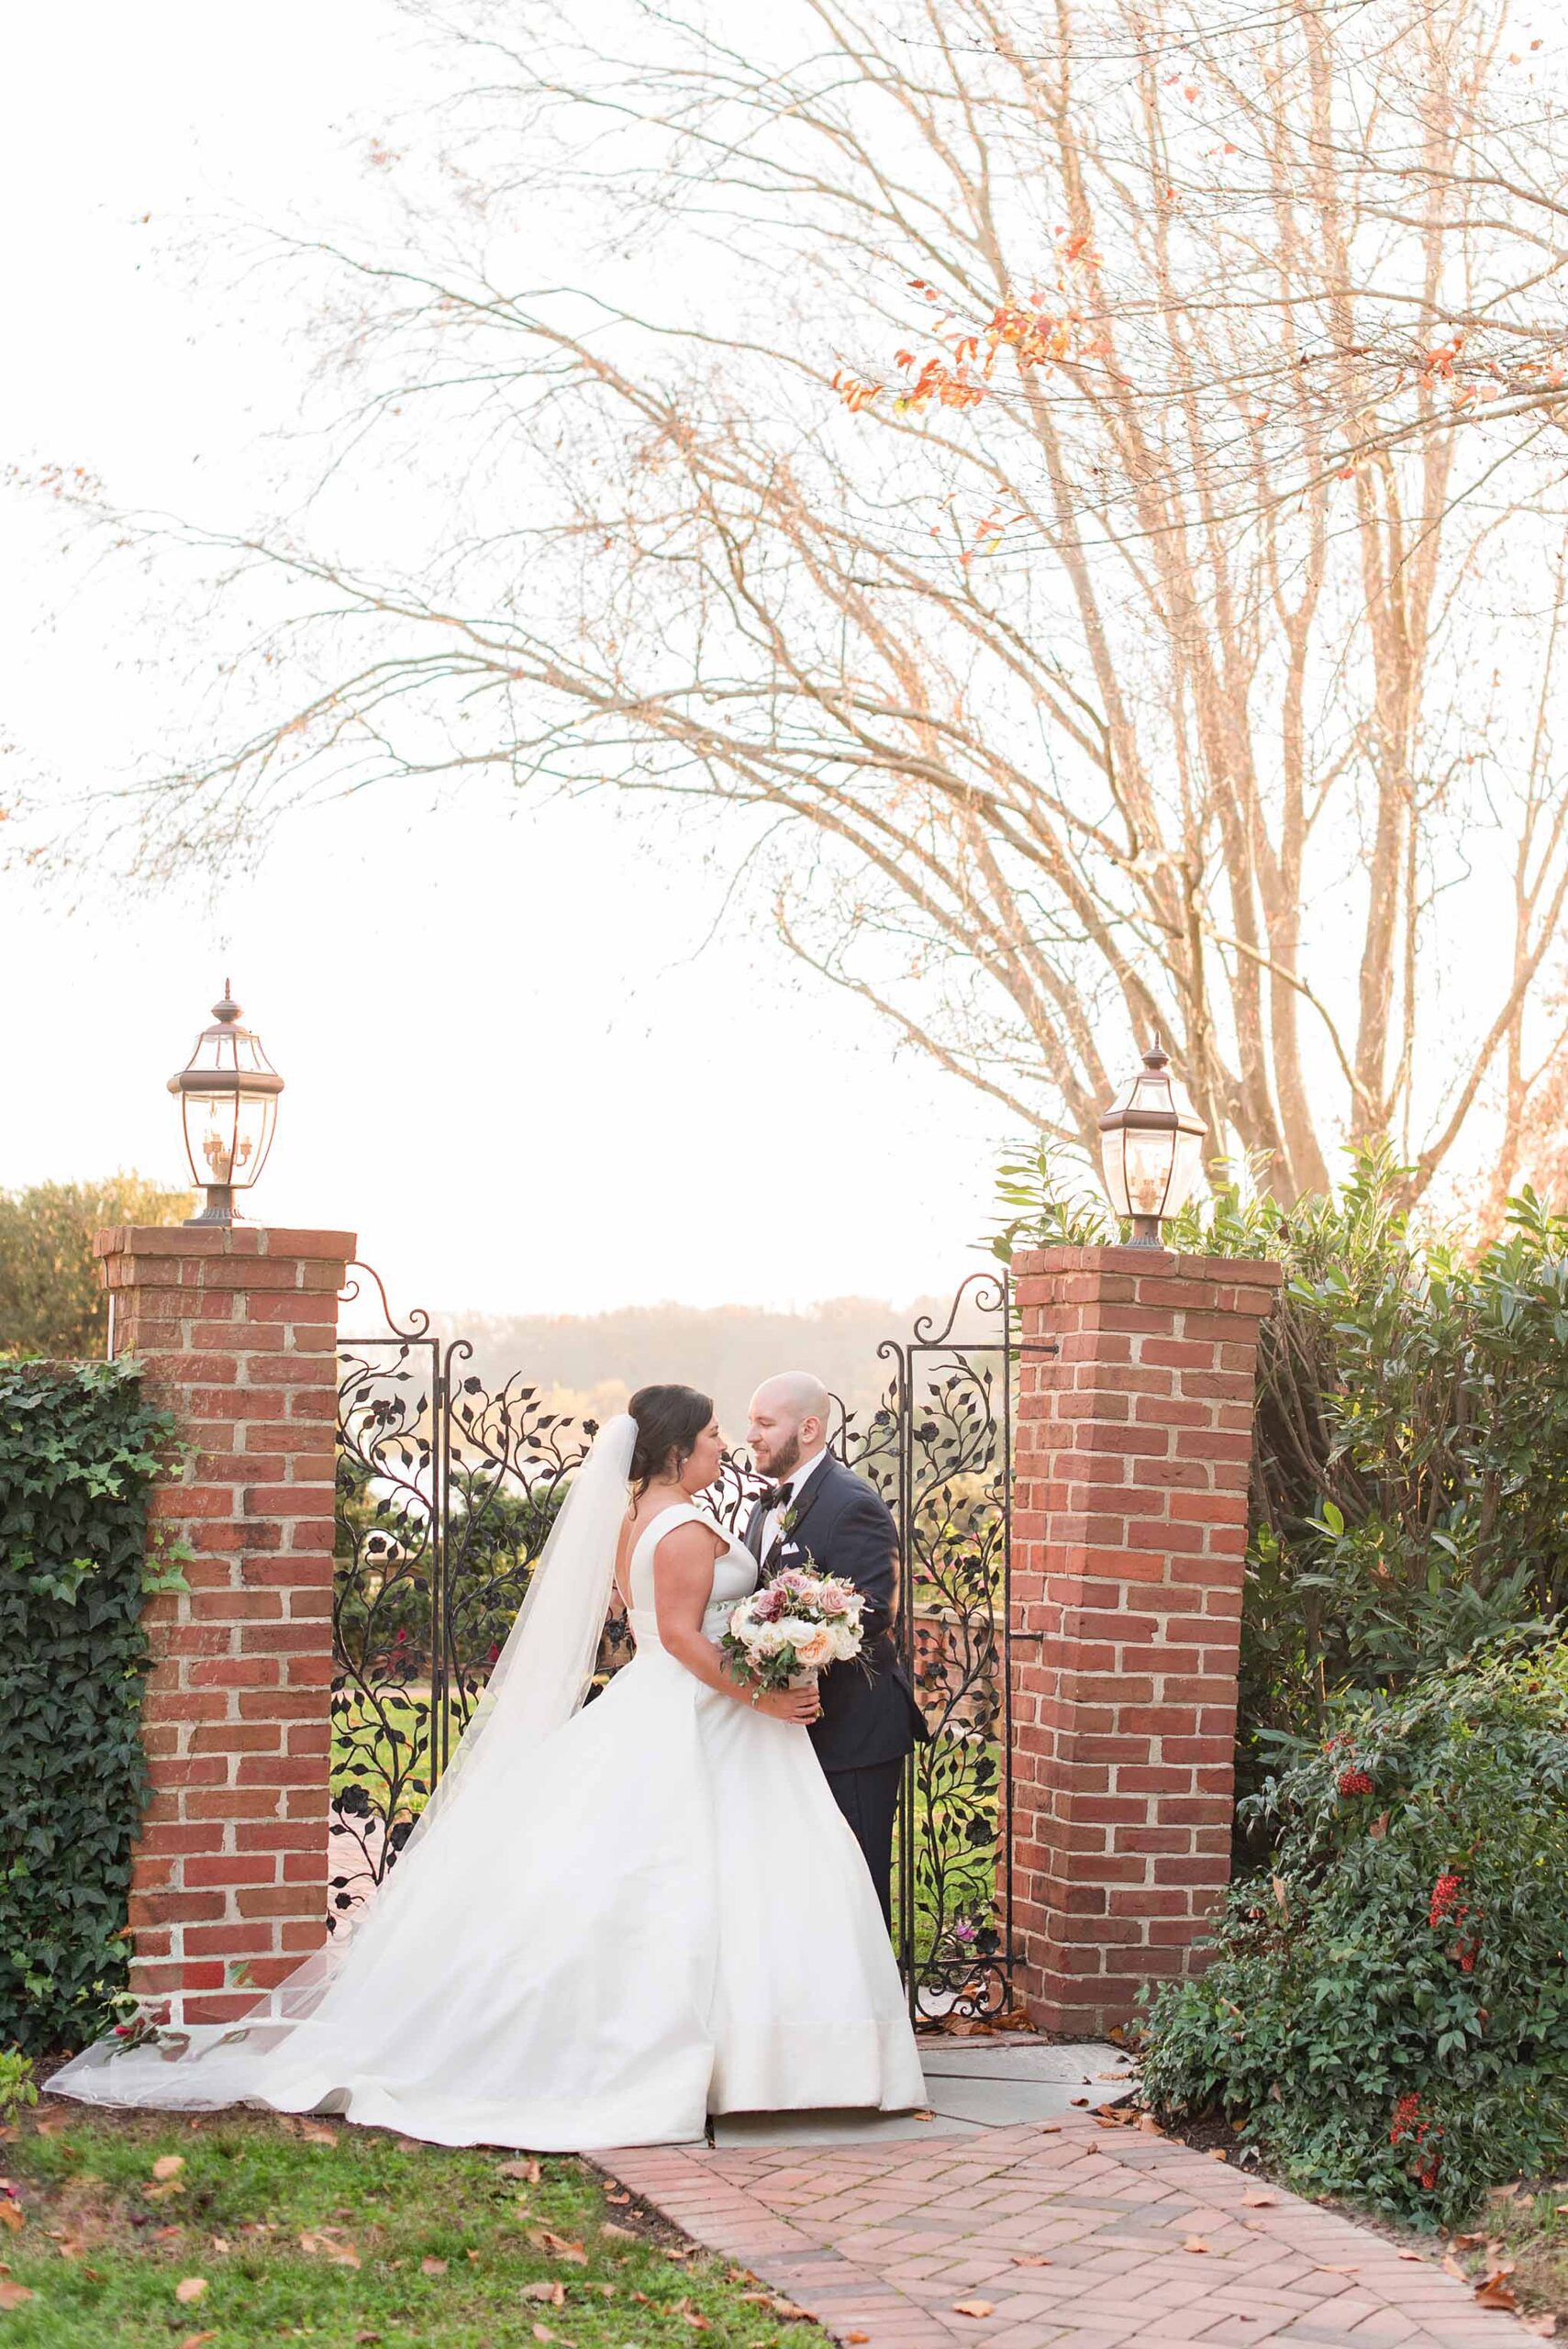 Newlyweds share a quiet sunset moment framed by brick garden walls and iron gate at their Brittland Estates Wedding